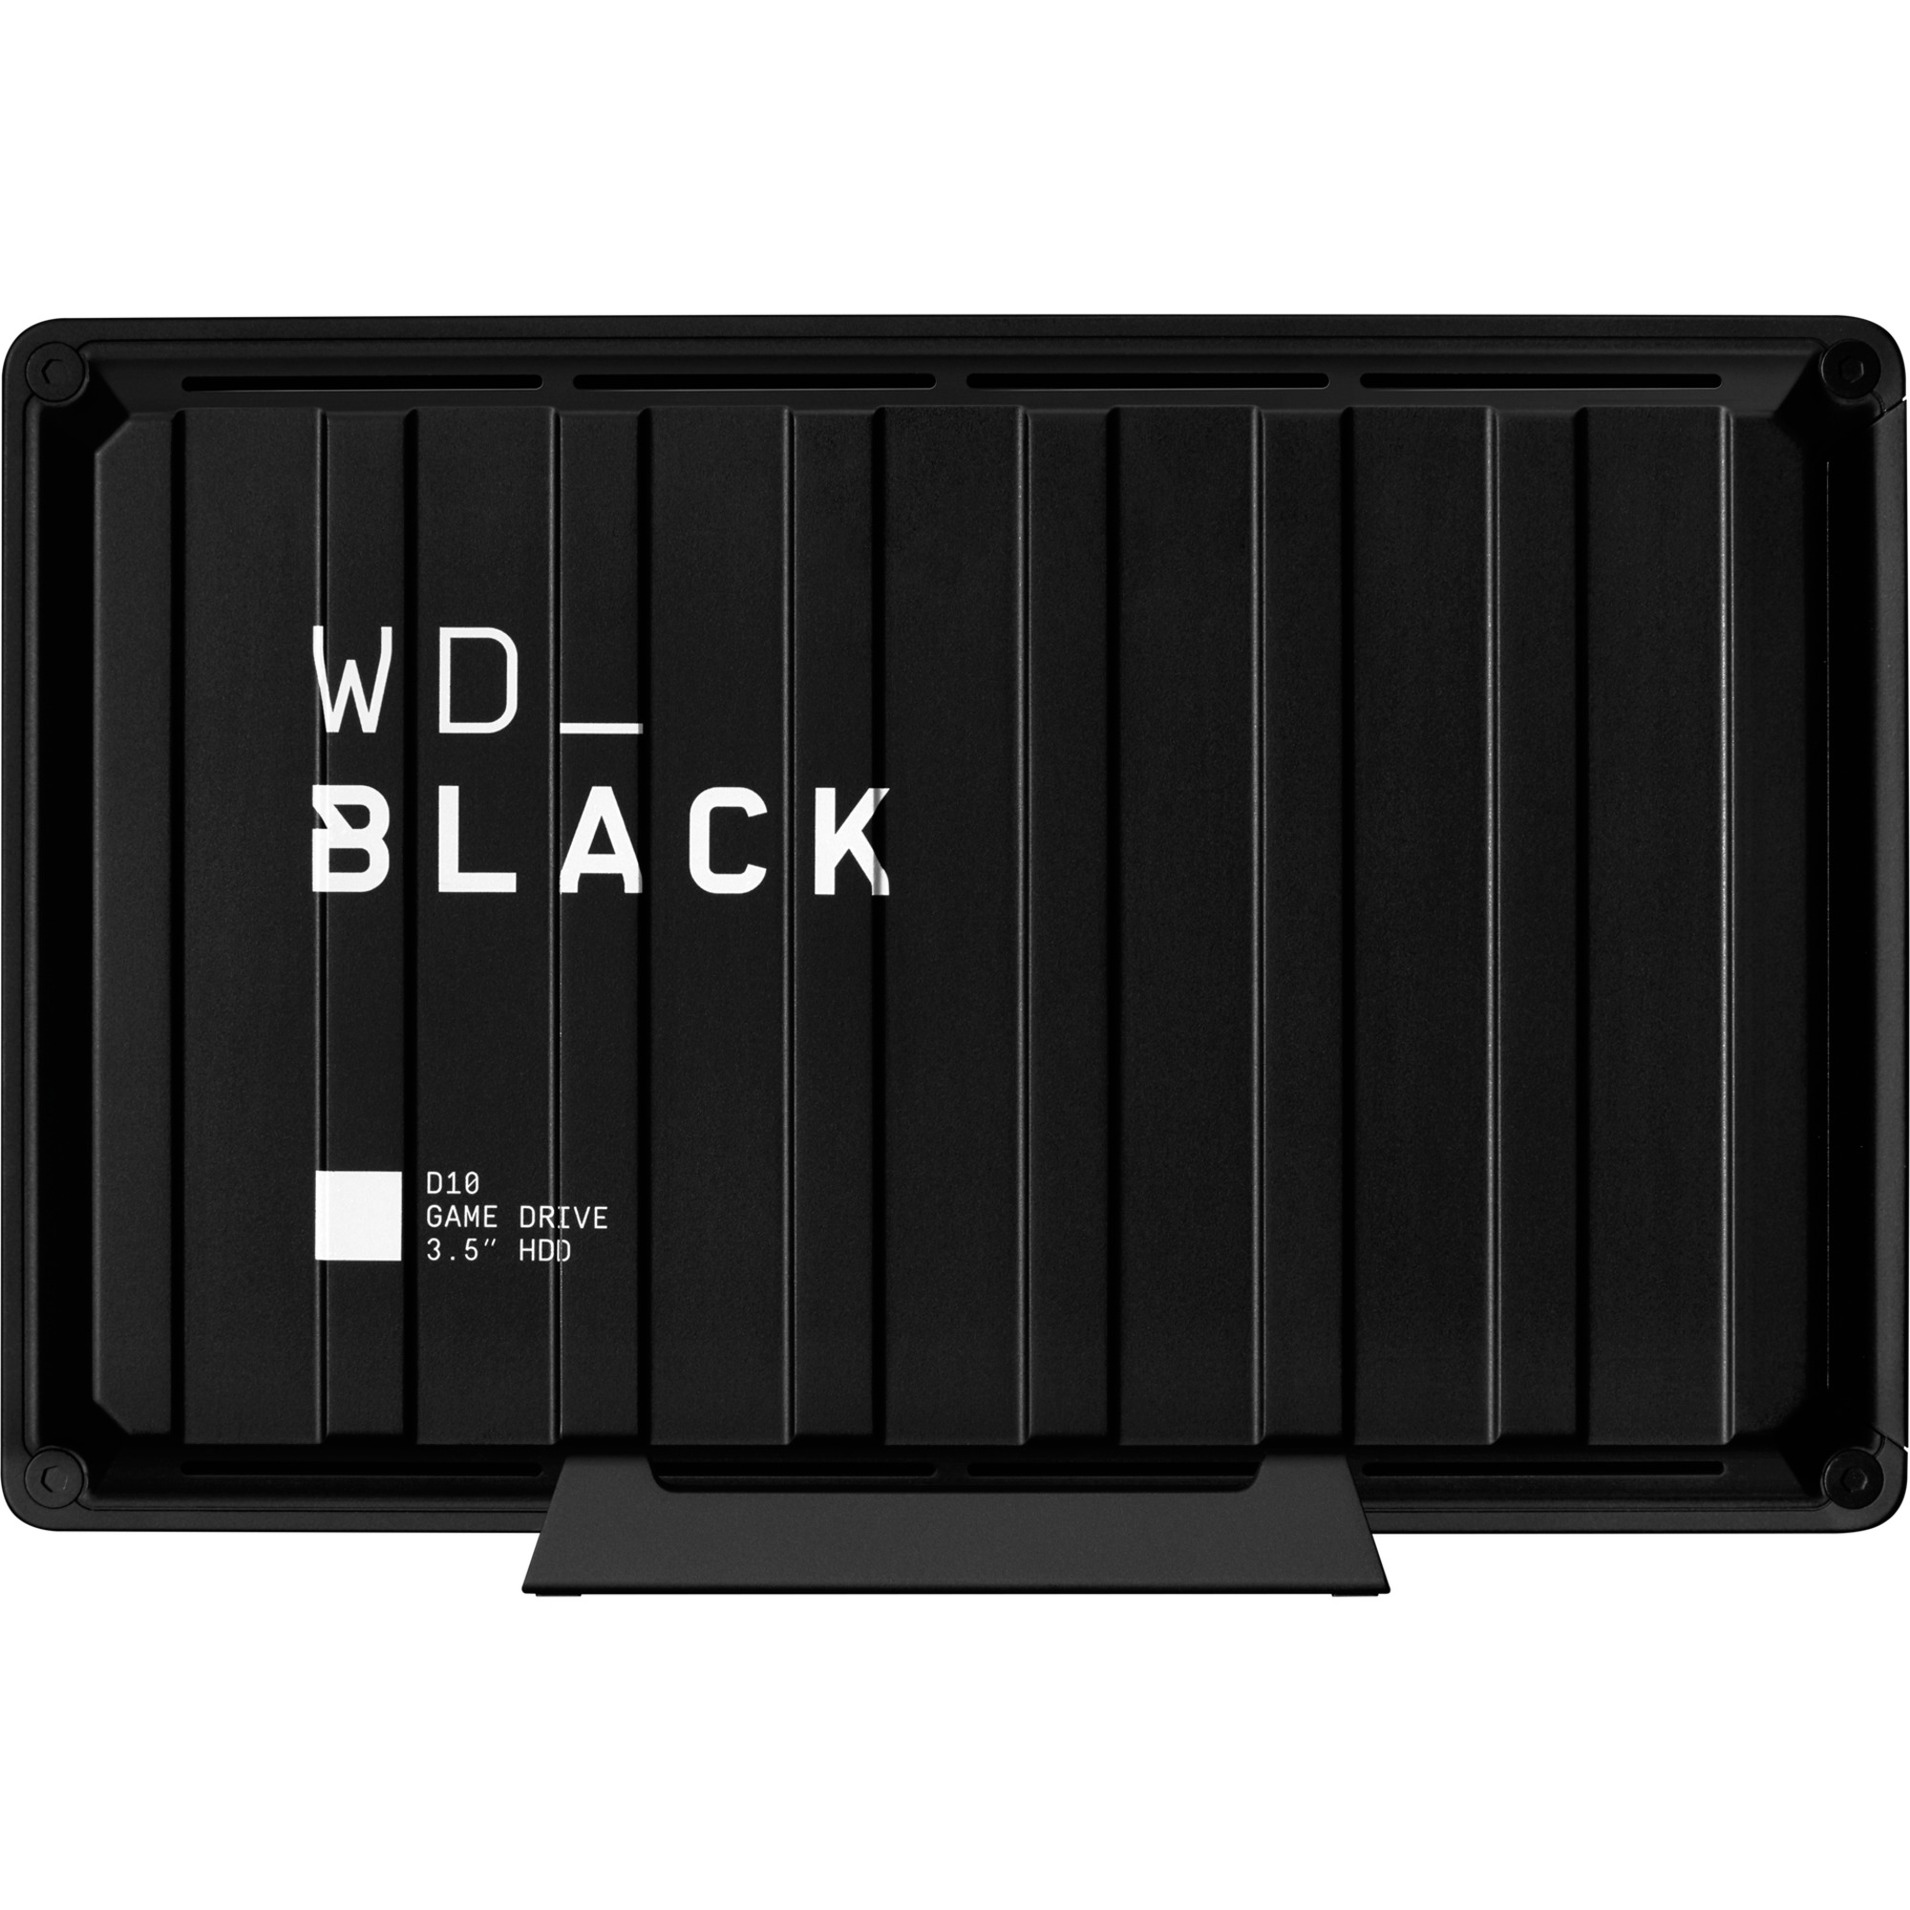 Black D10 Game Drive 8 TB